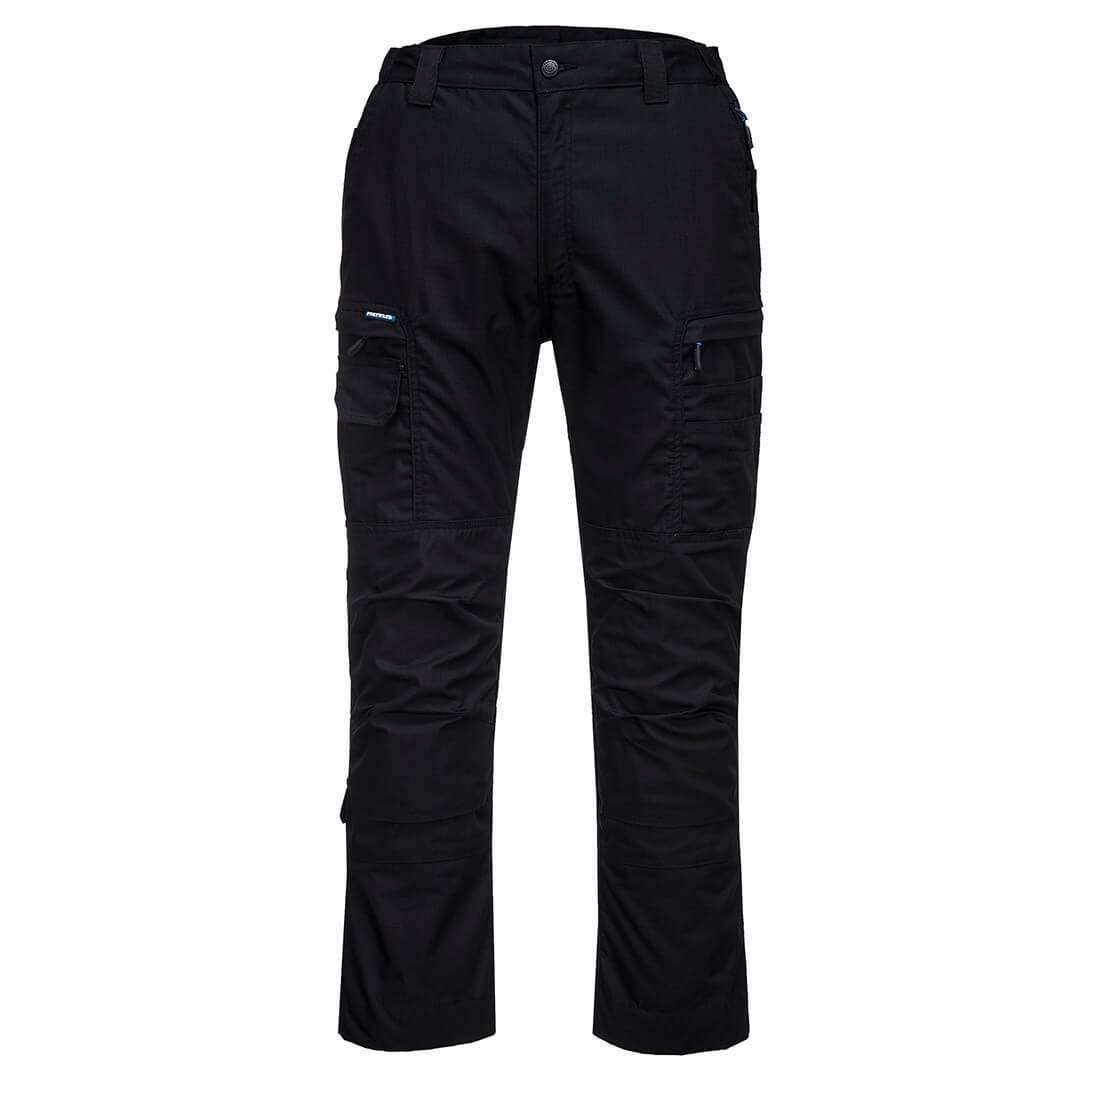 KX3 Ripstop Trouser - Safetywear